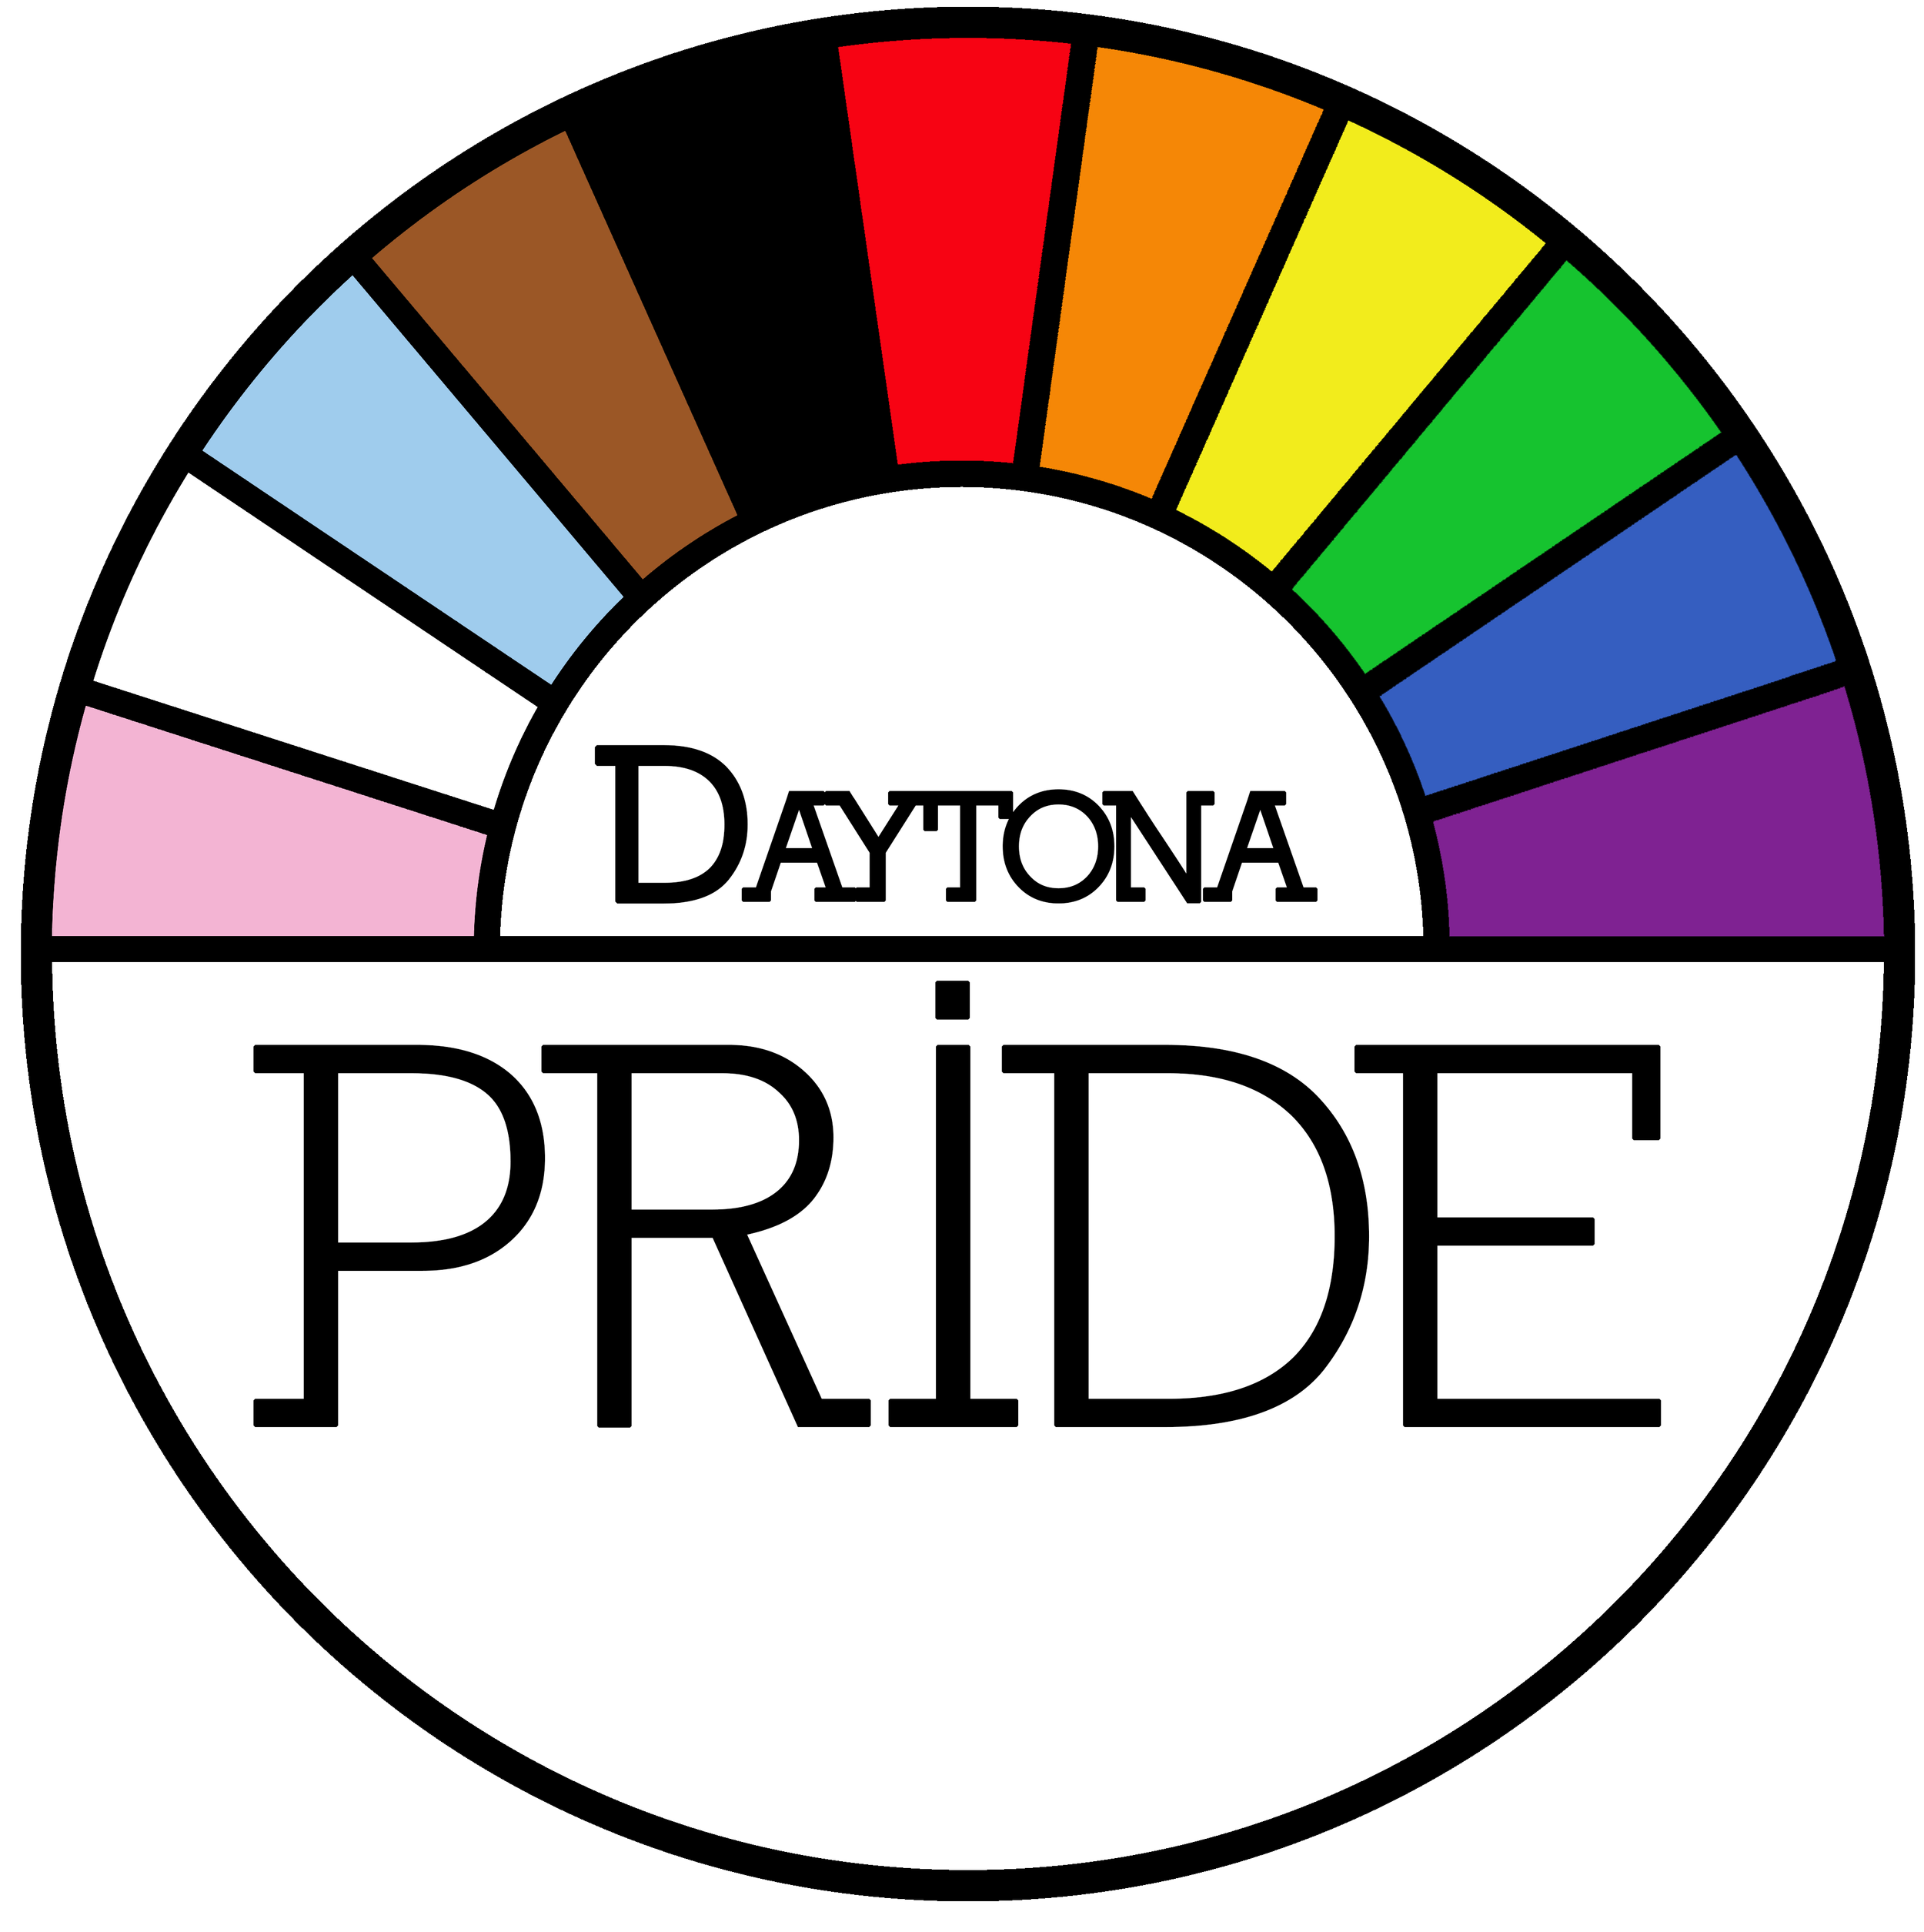 Daytona Pride